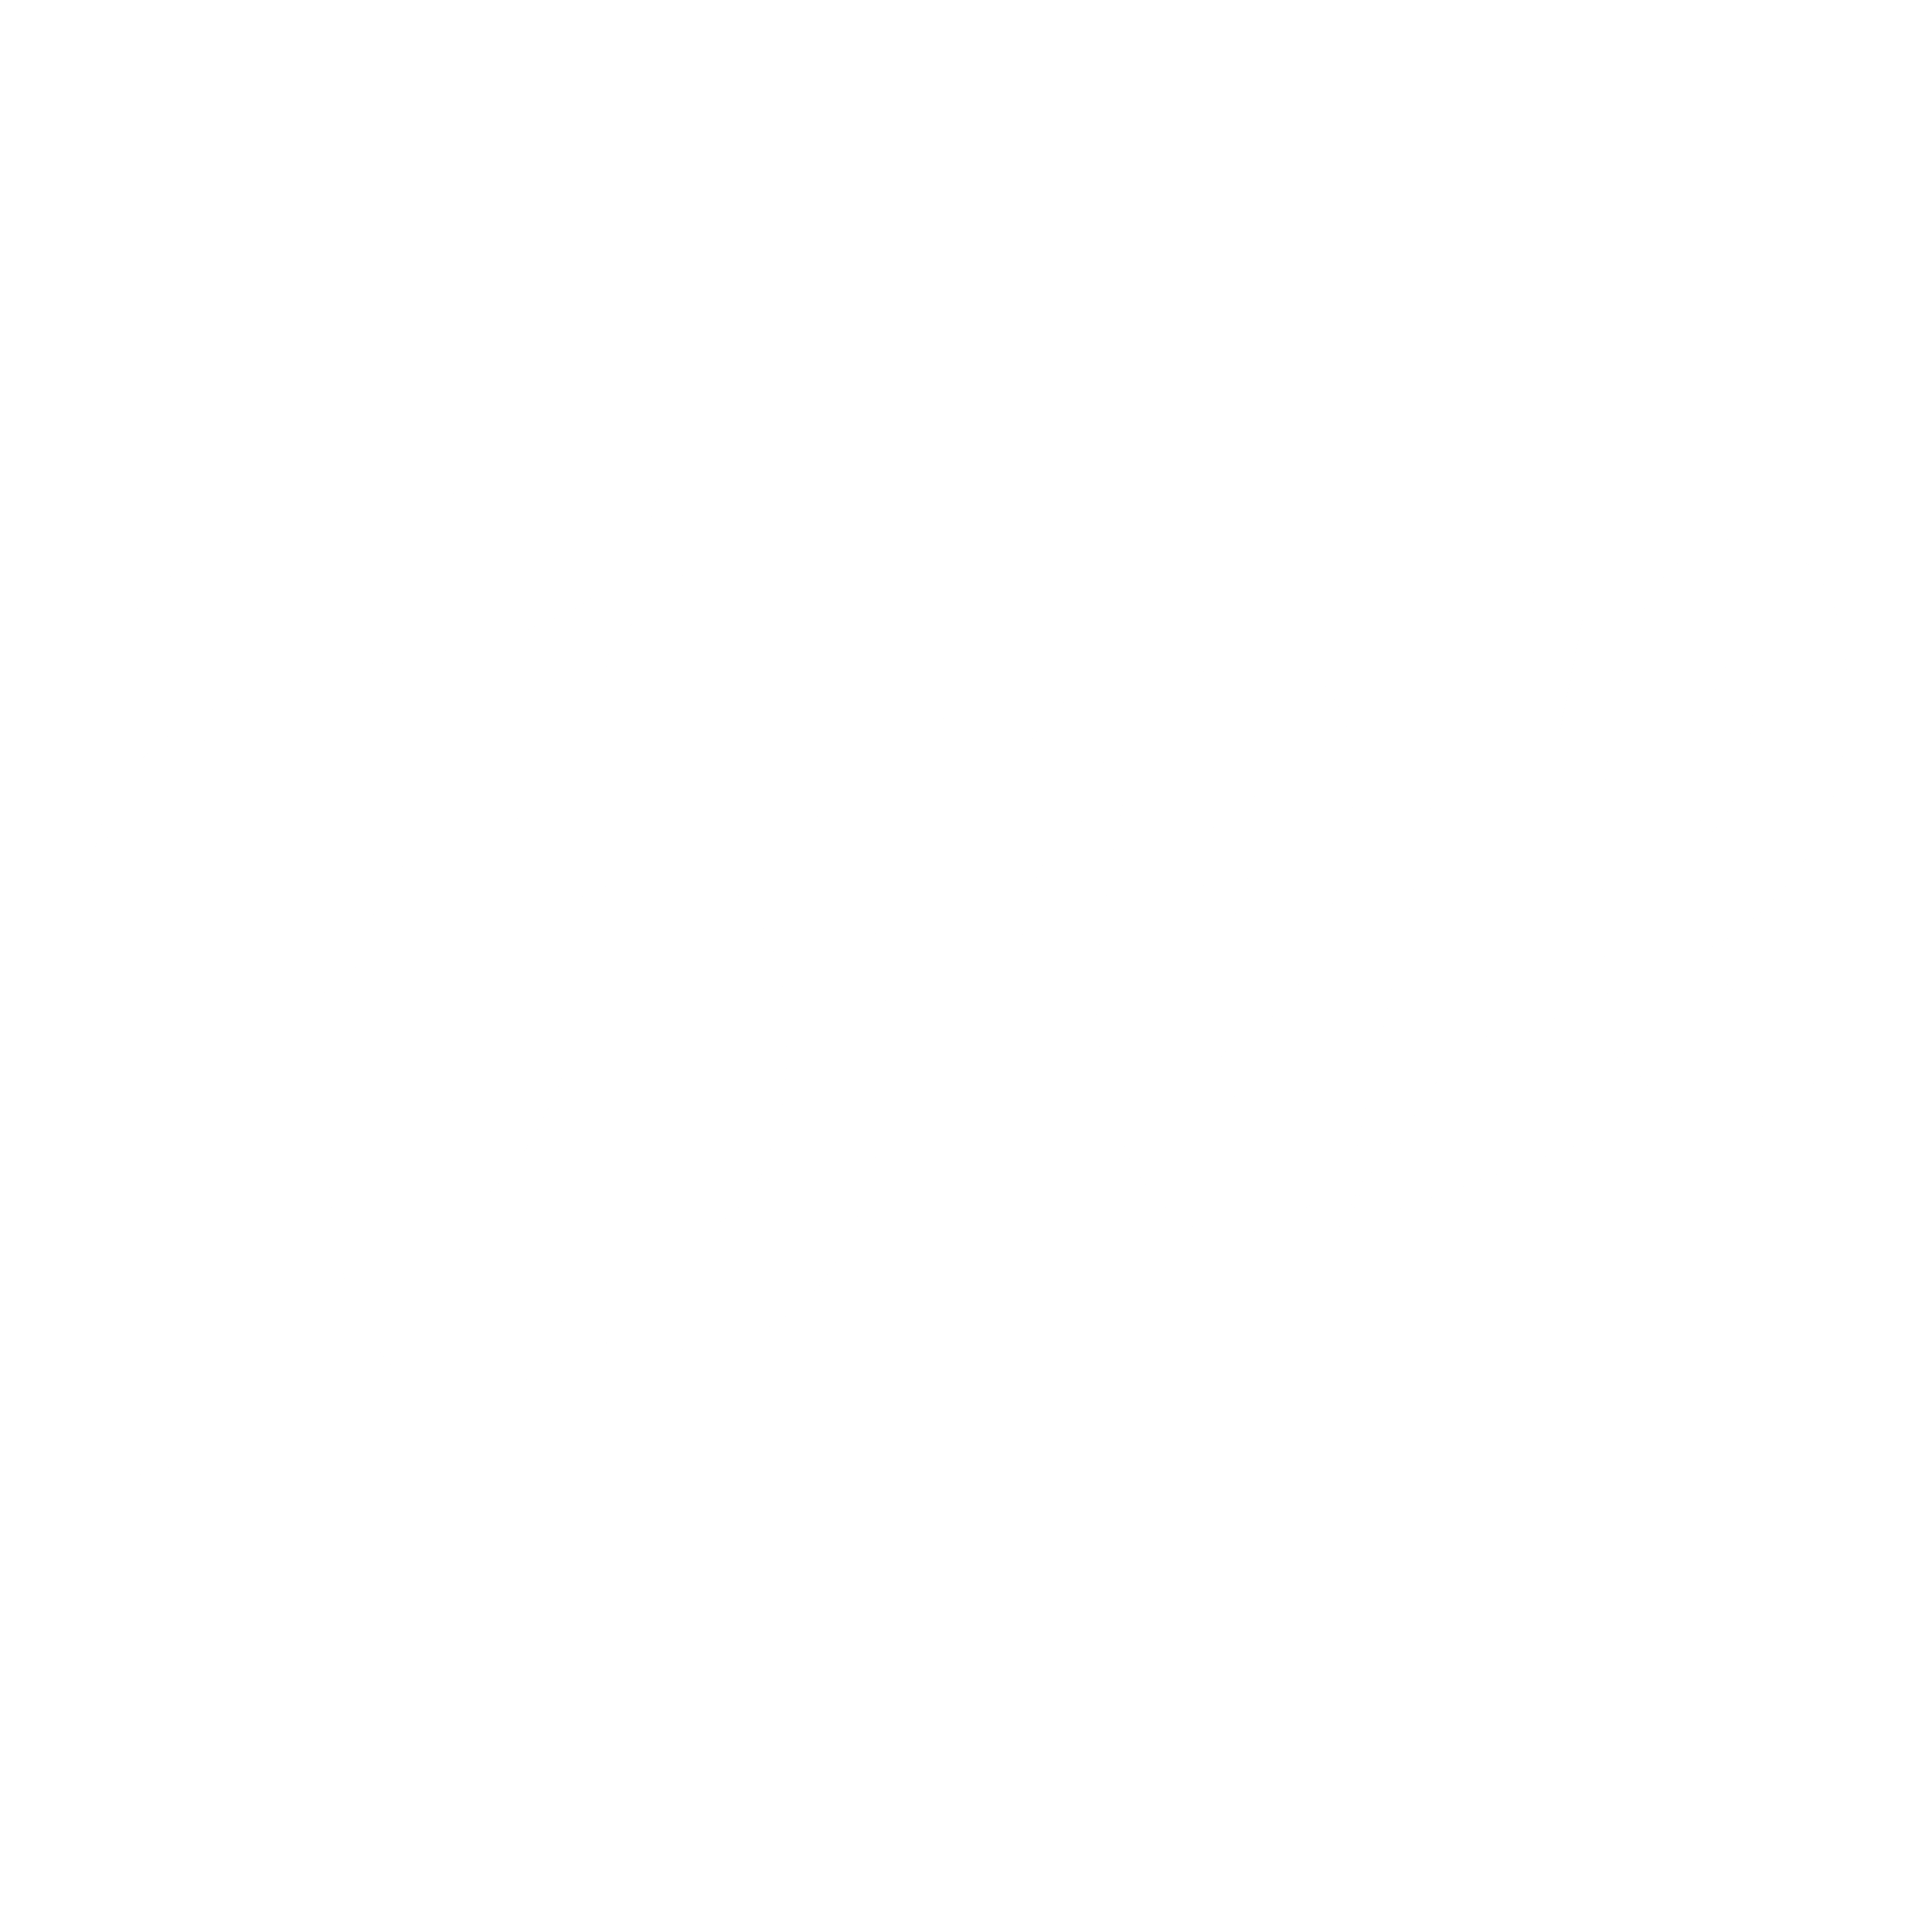 Frebeze Logo - Febreze Logo PNG Transparent & SVG Vector - Freebie Supply